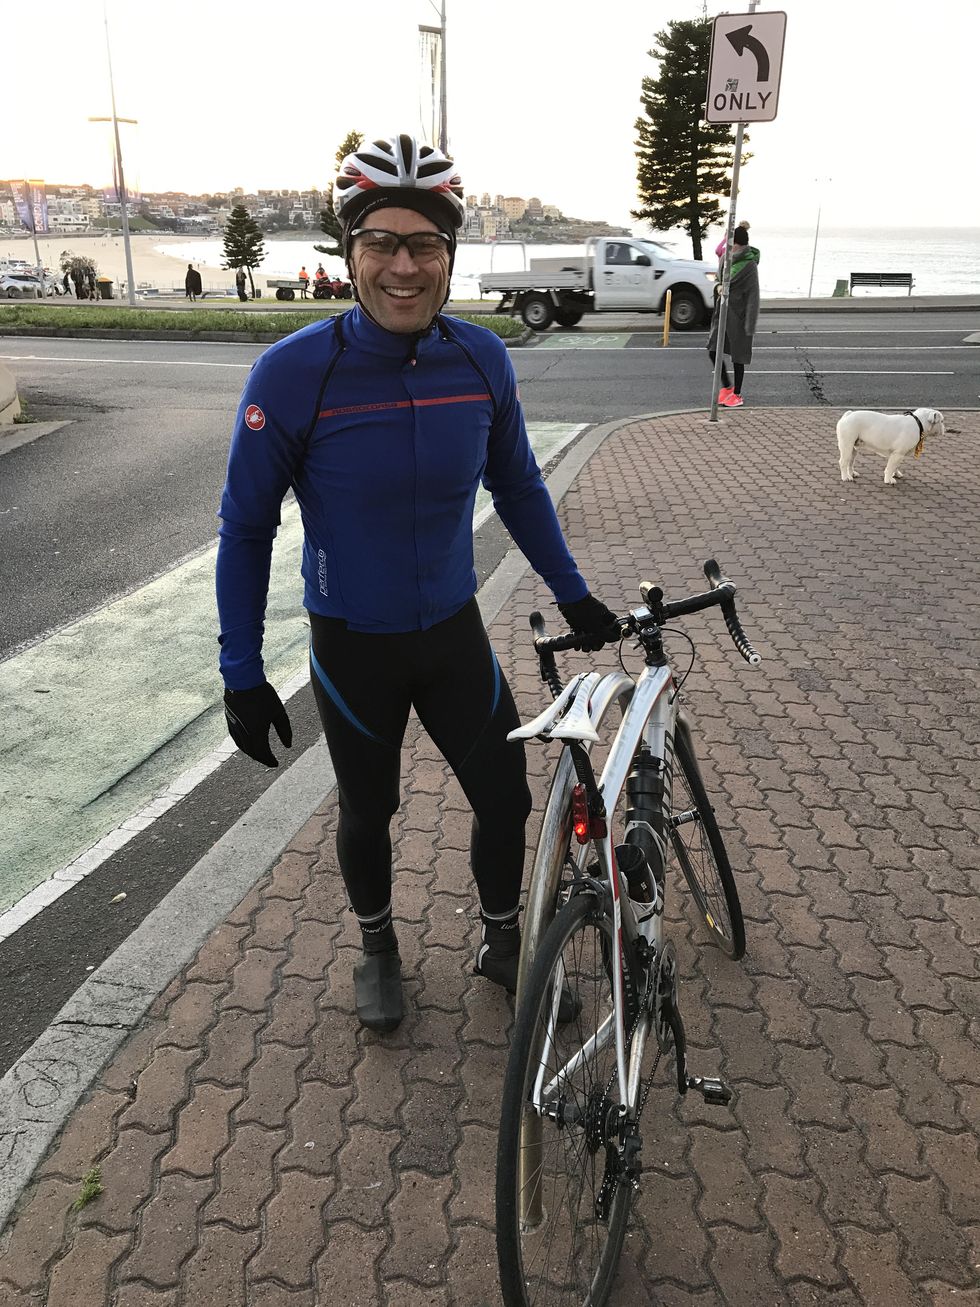 carl matthei in his bike kit standing next to his bike and smiling